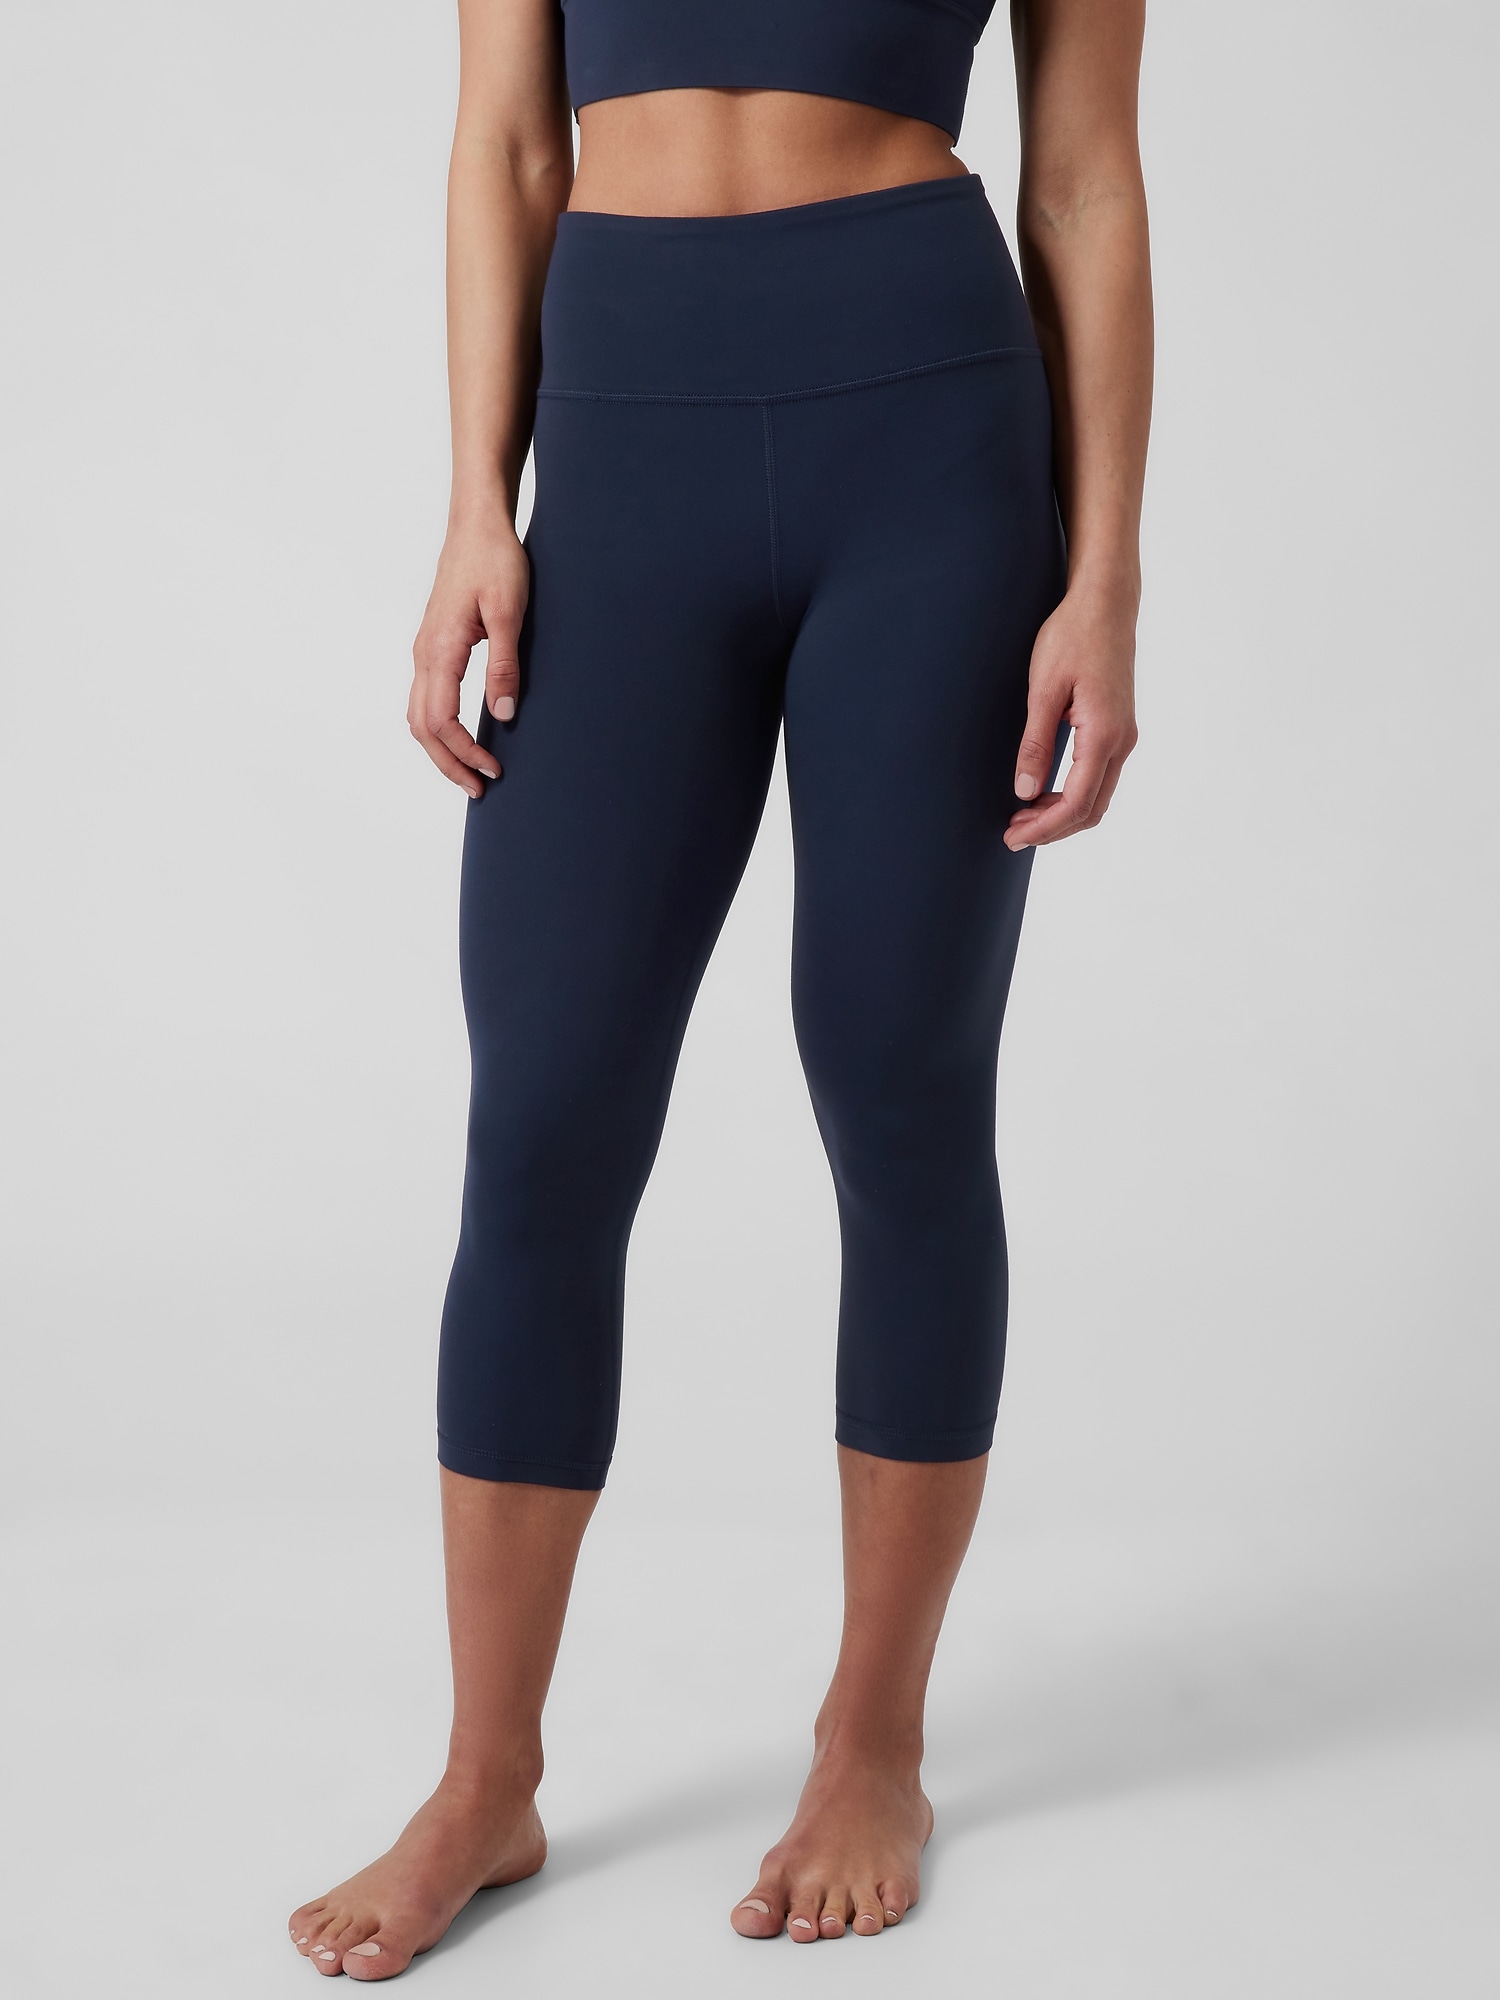 Athleta Womens Leggings Size XS Space Dye Gray Chaturanga Capri Crop 921625  - $18 - From Katie